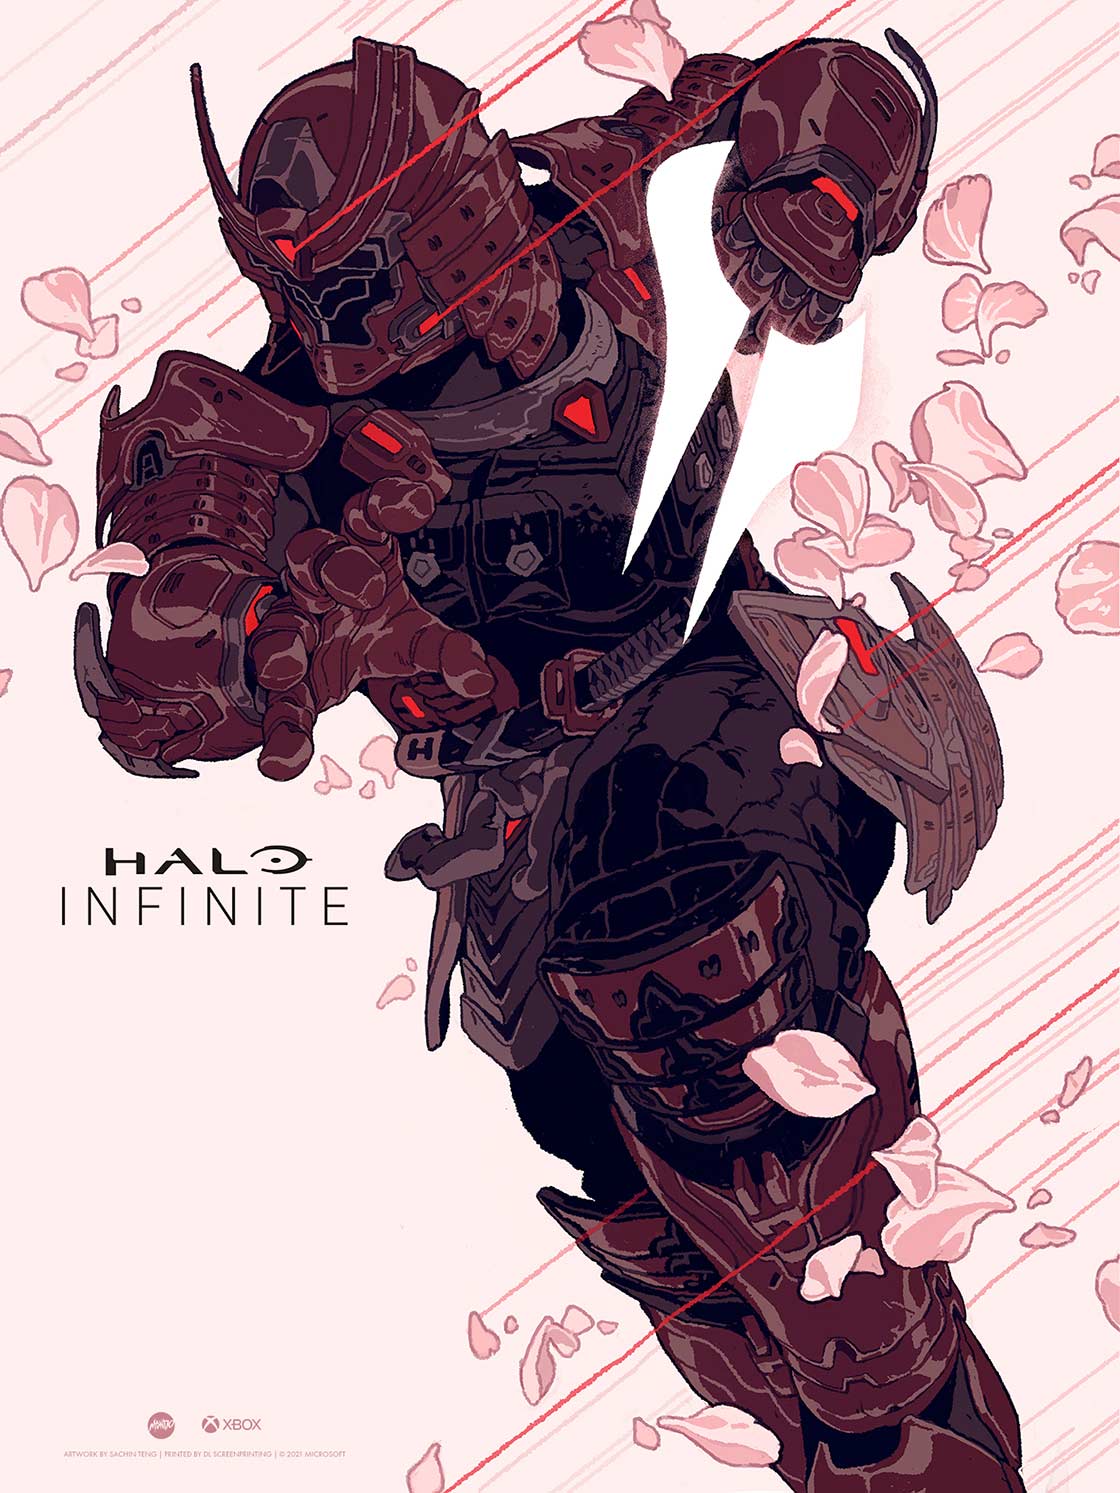 Halo Infinite fan artwork of samurai body suit and energy sword